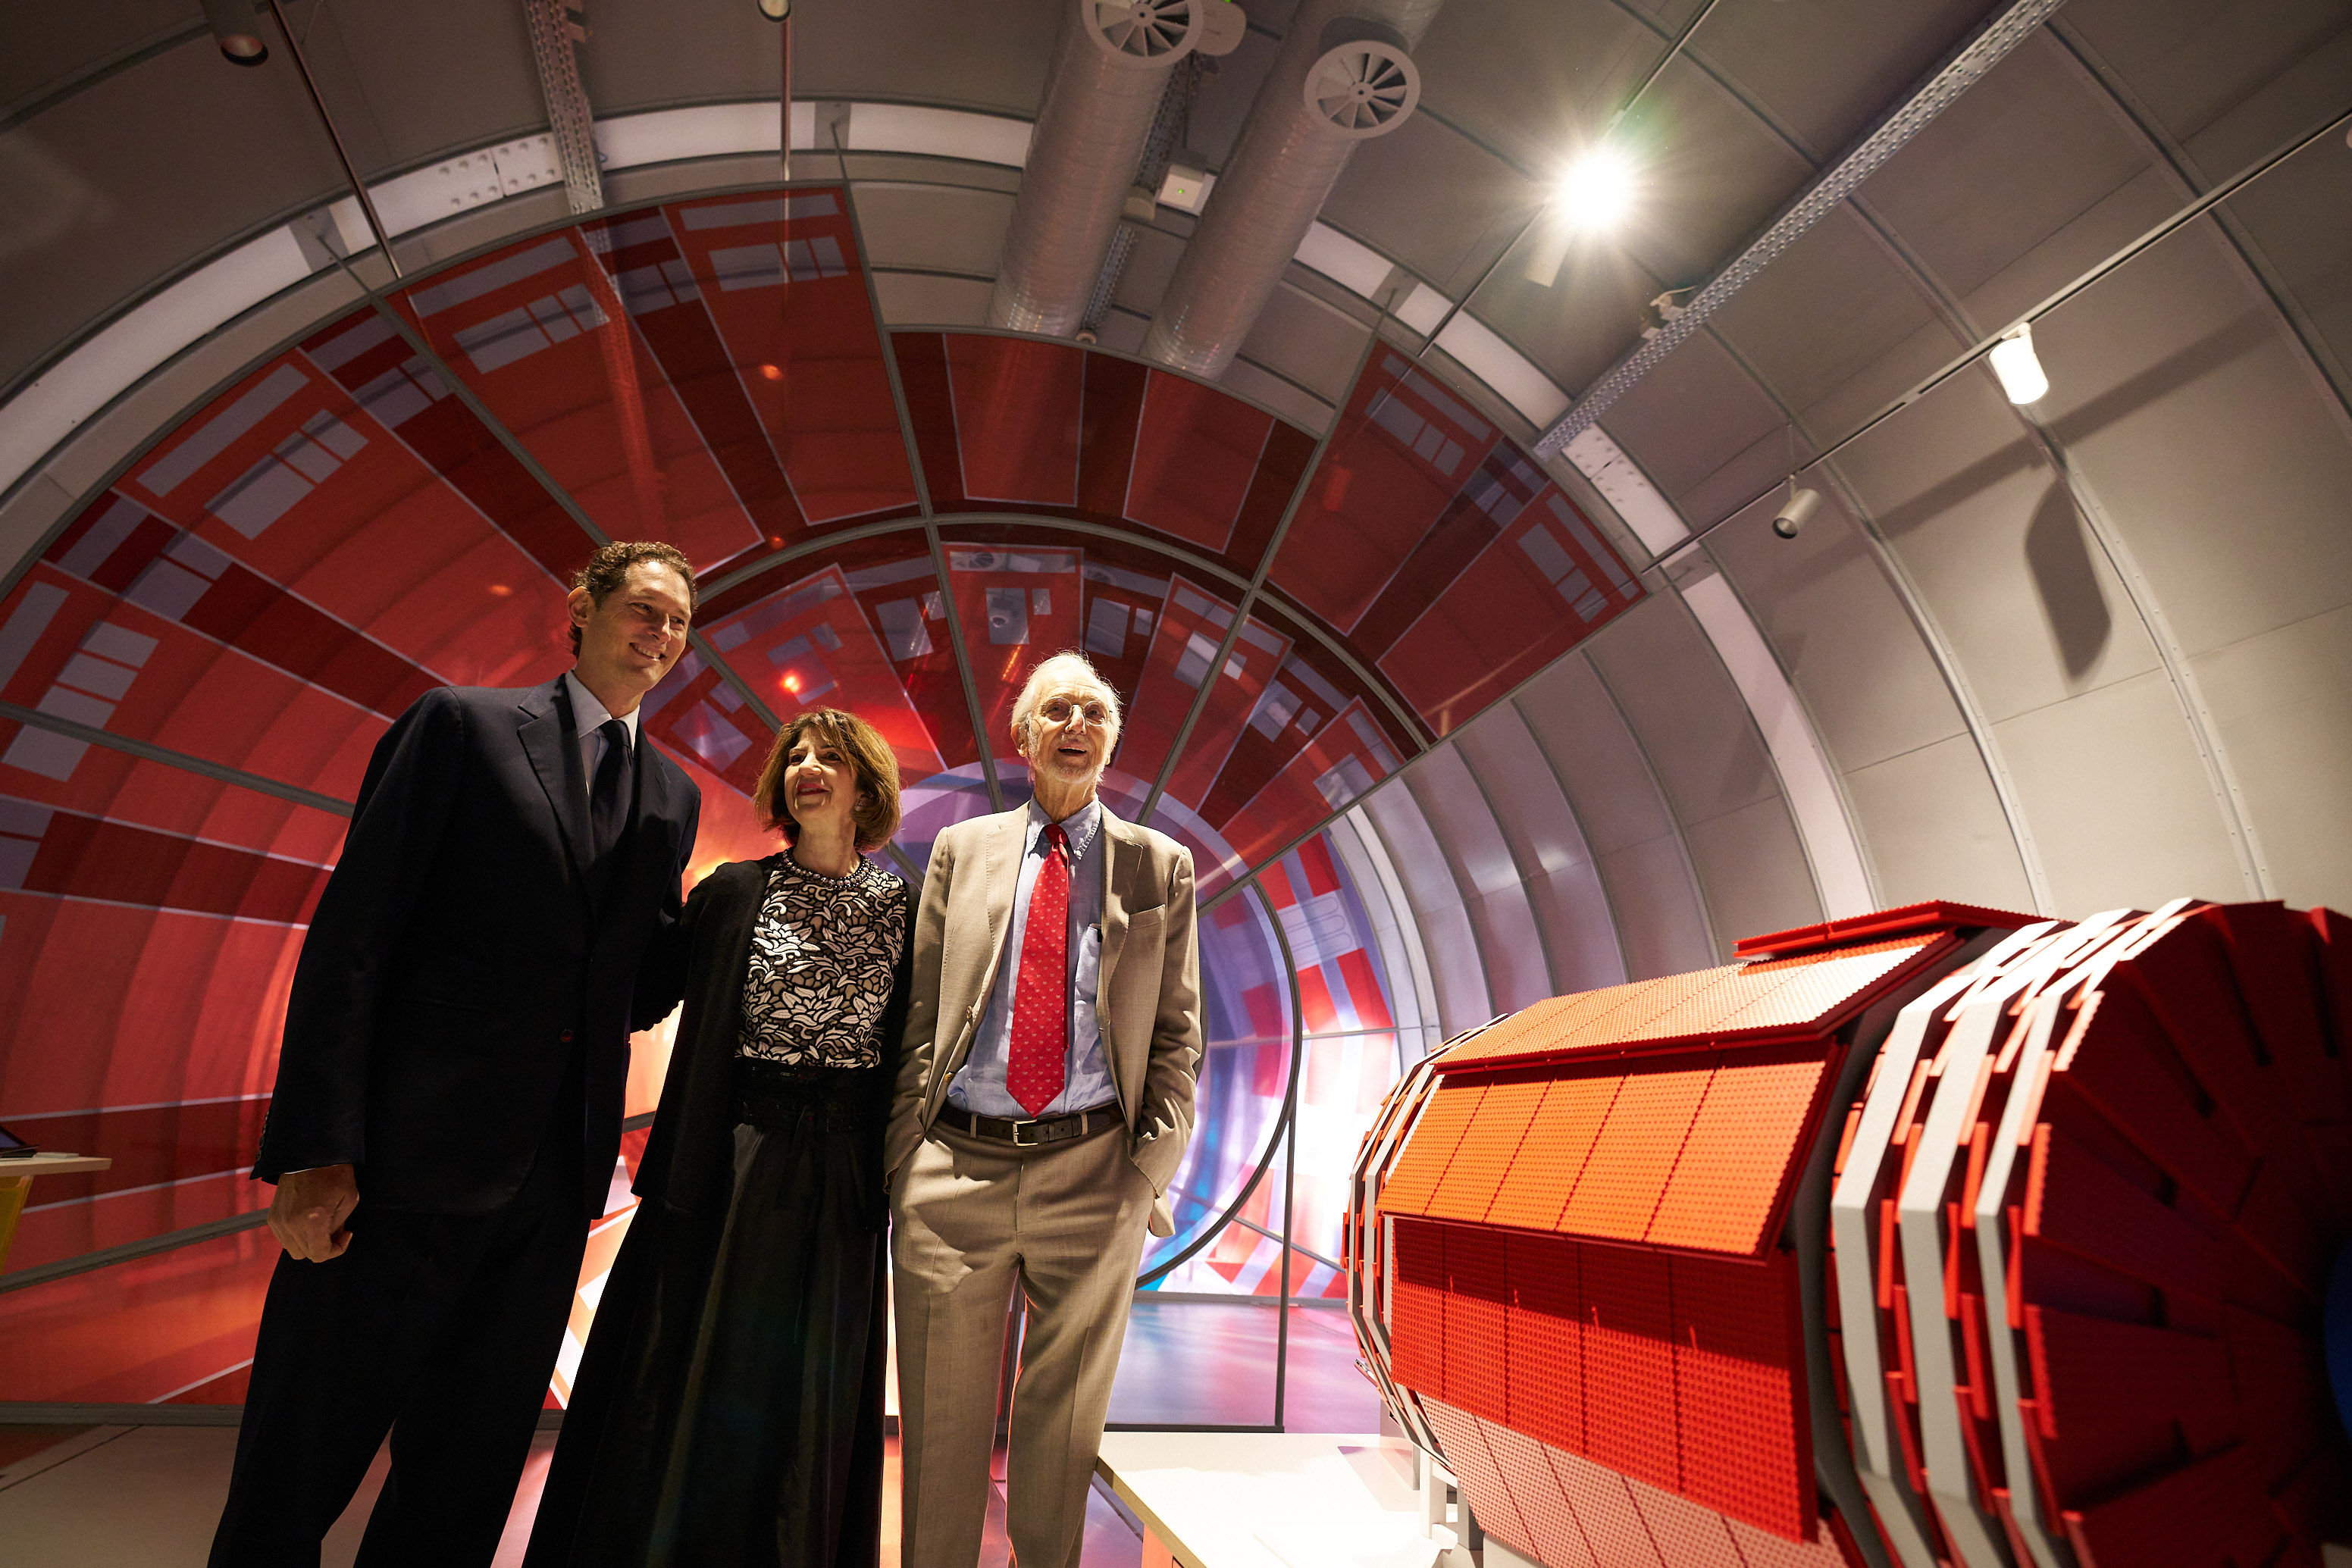 “CERN Science Gateway” projesi faliyete geçirildi